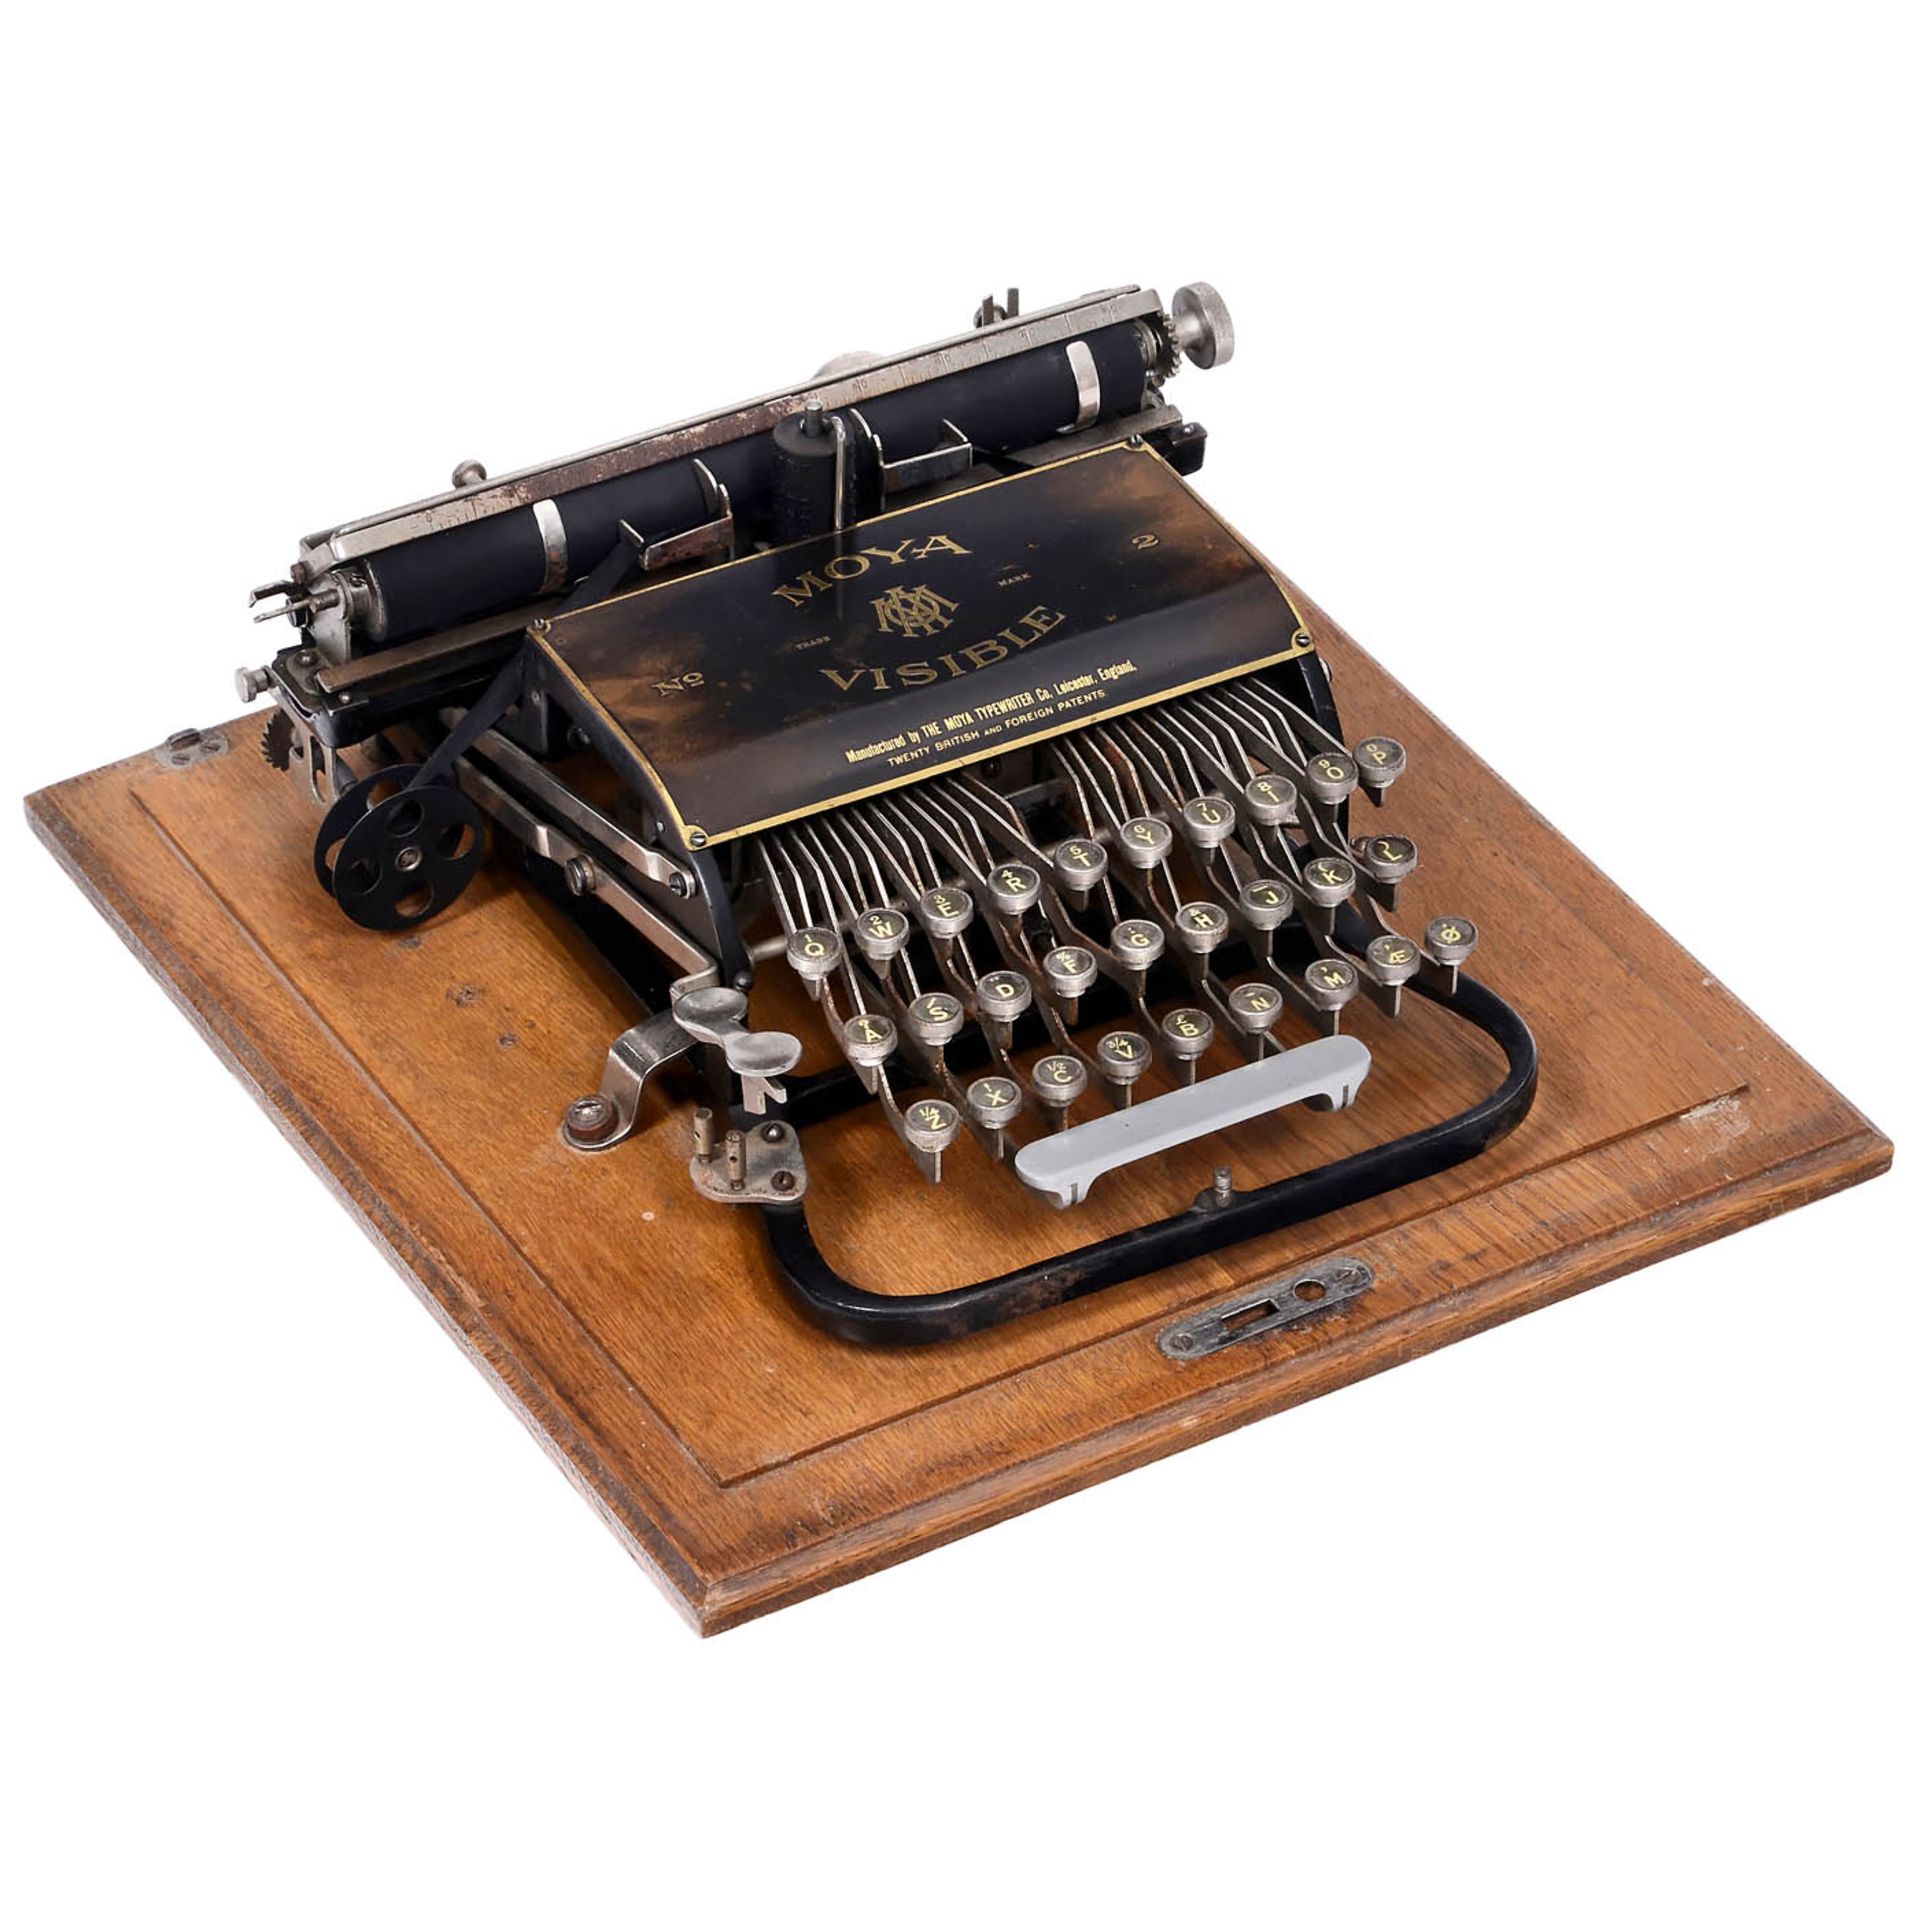 "Moya Visible No. 2", 1905 Moya Typewriter Company of Leicester, England. Kleine englische